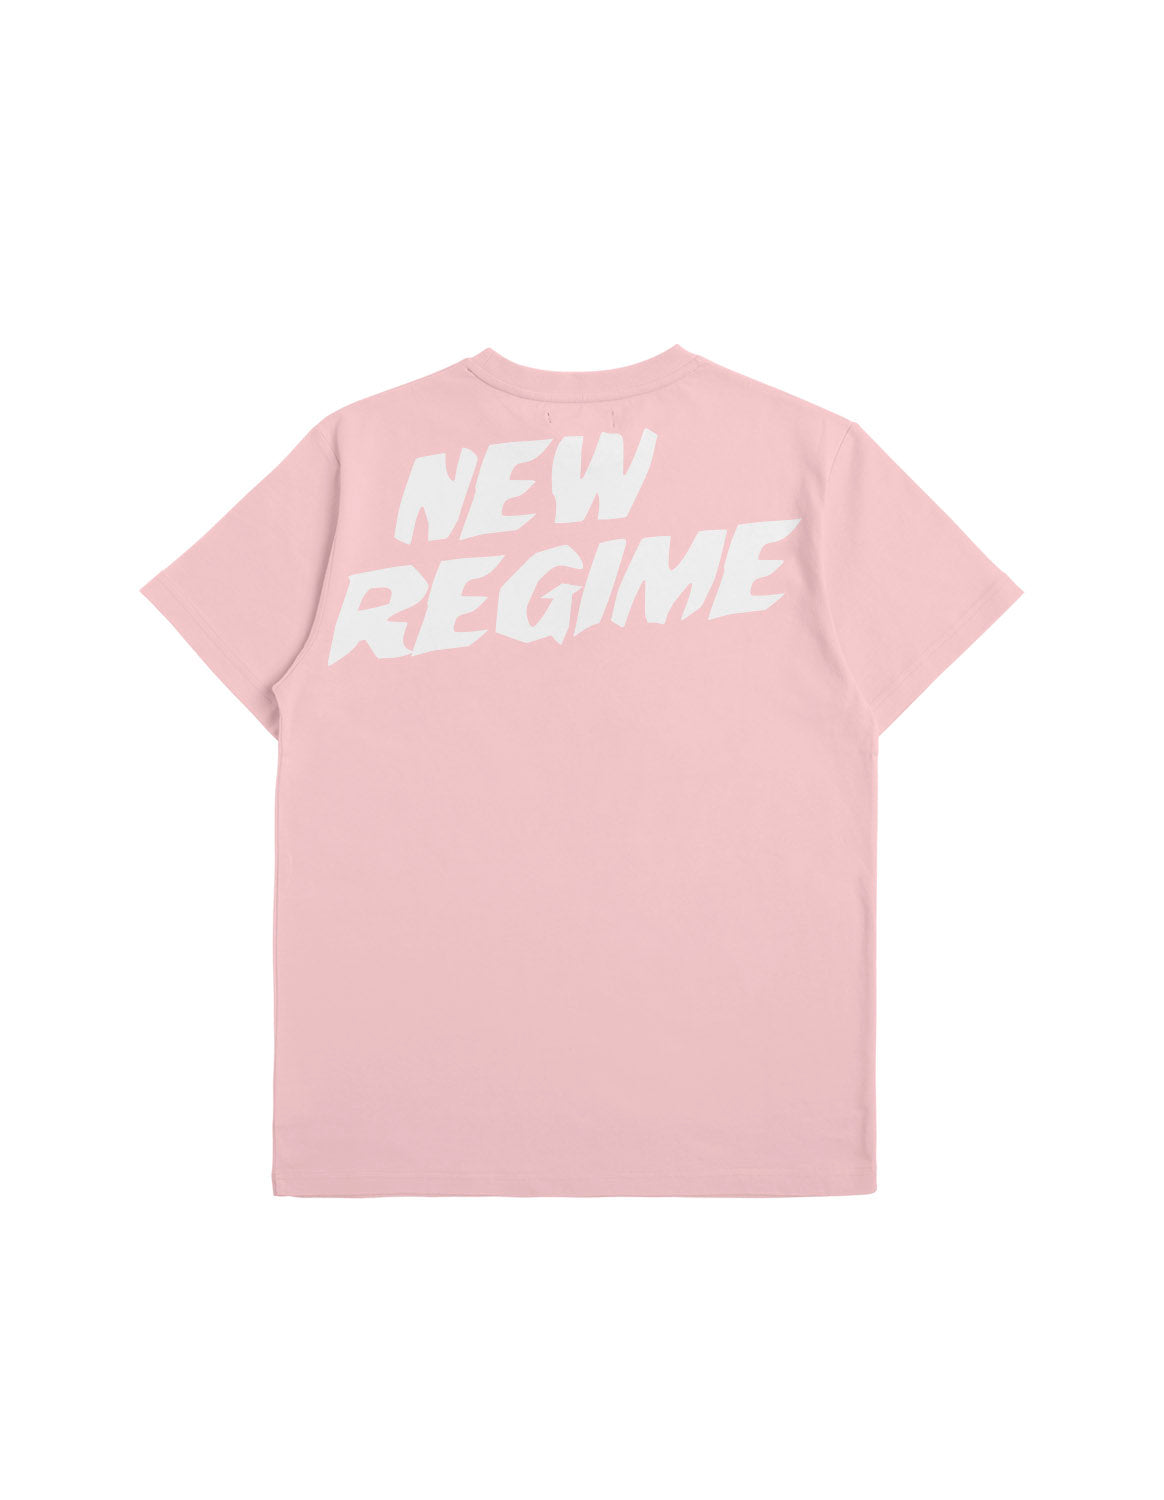 Signature T-shirt (Light Pink)